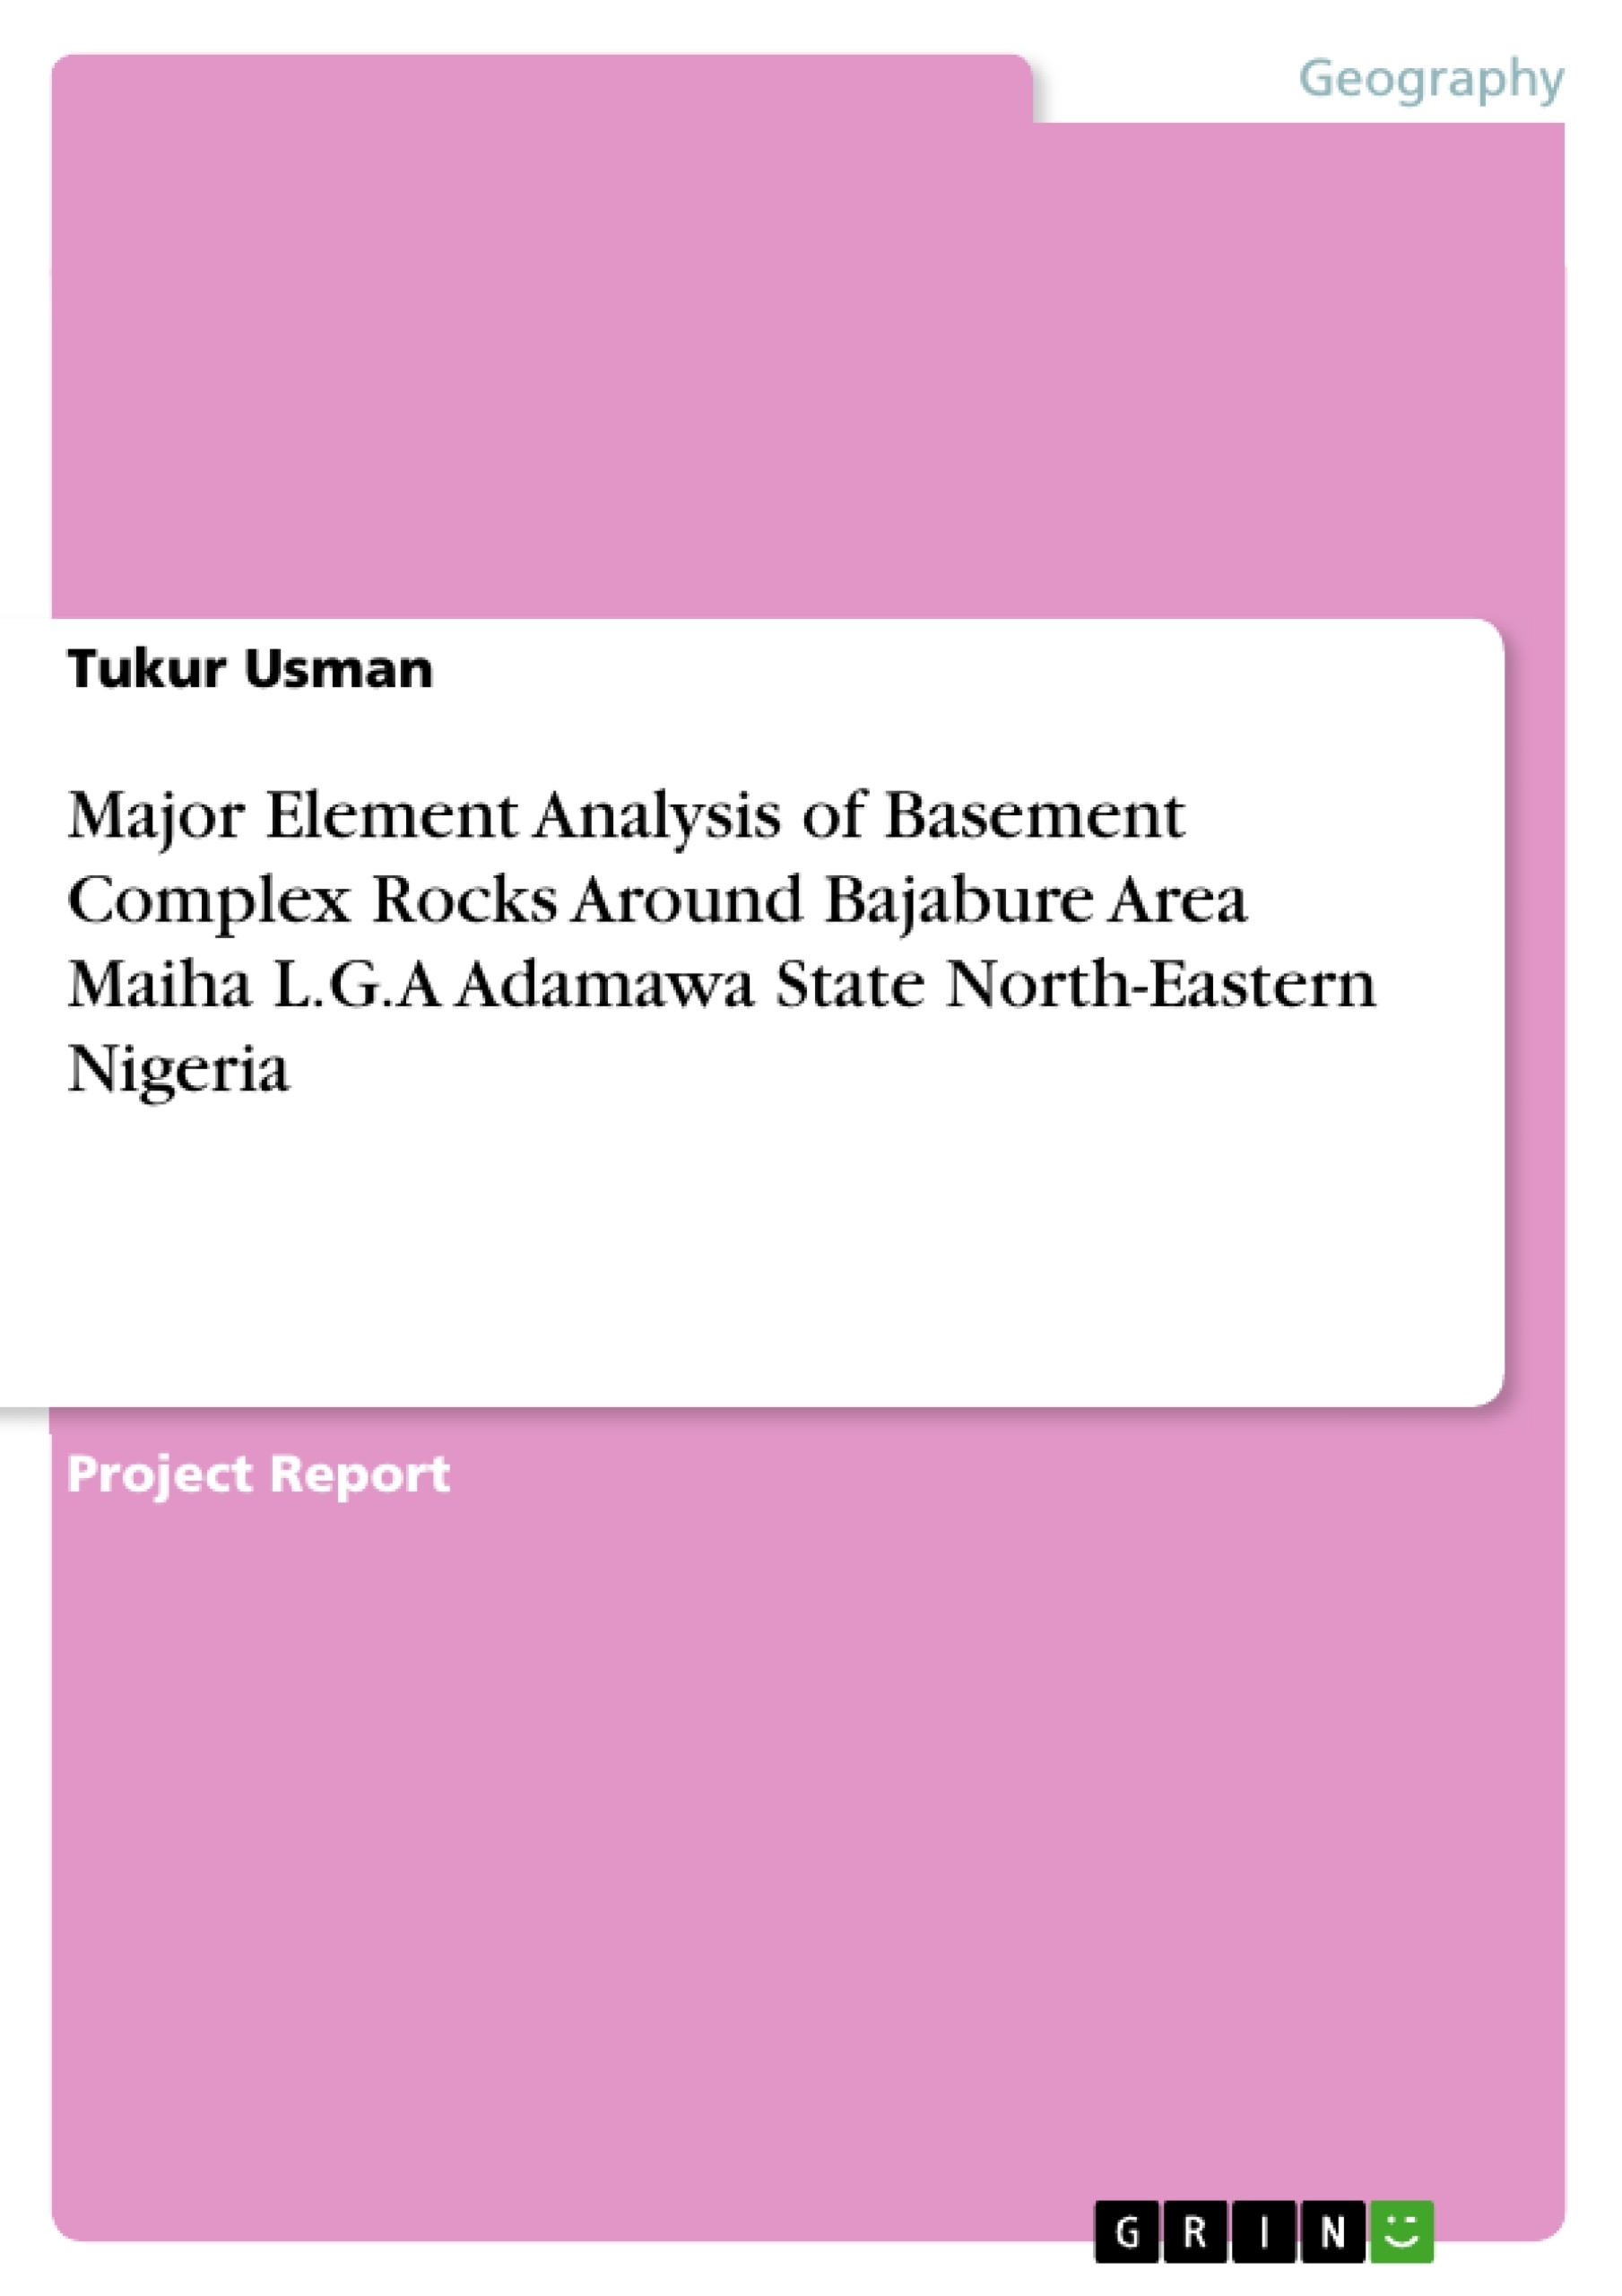 Title: Major Element Analysis of Basement Complex Rocks Around Bajabure Area Maiha L.G.A Adamawa State North-Eastern Nigeria